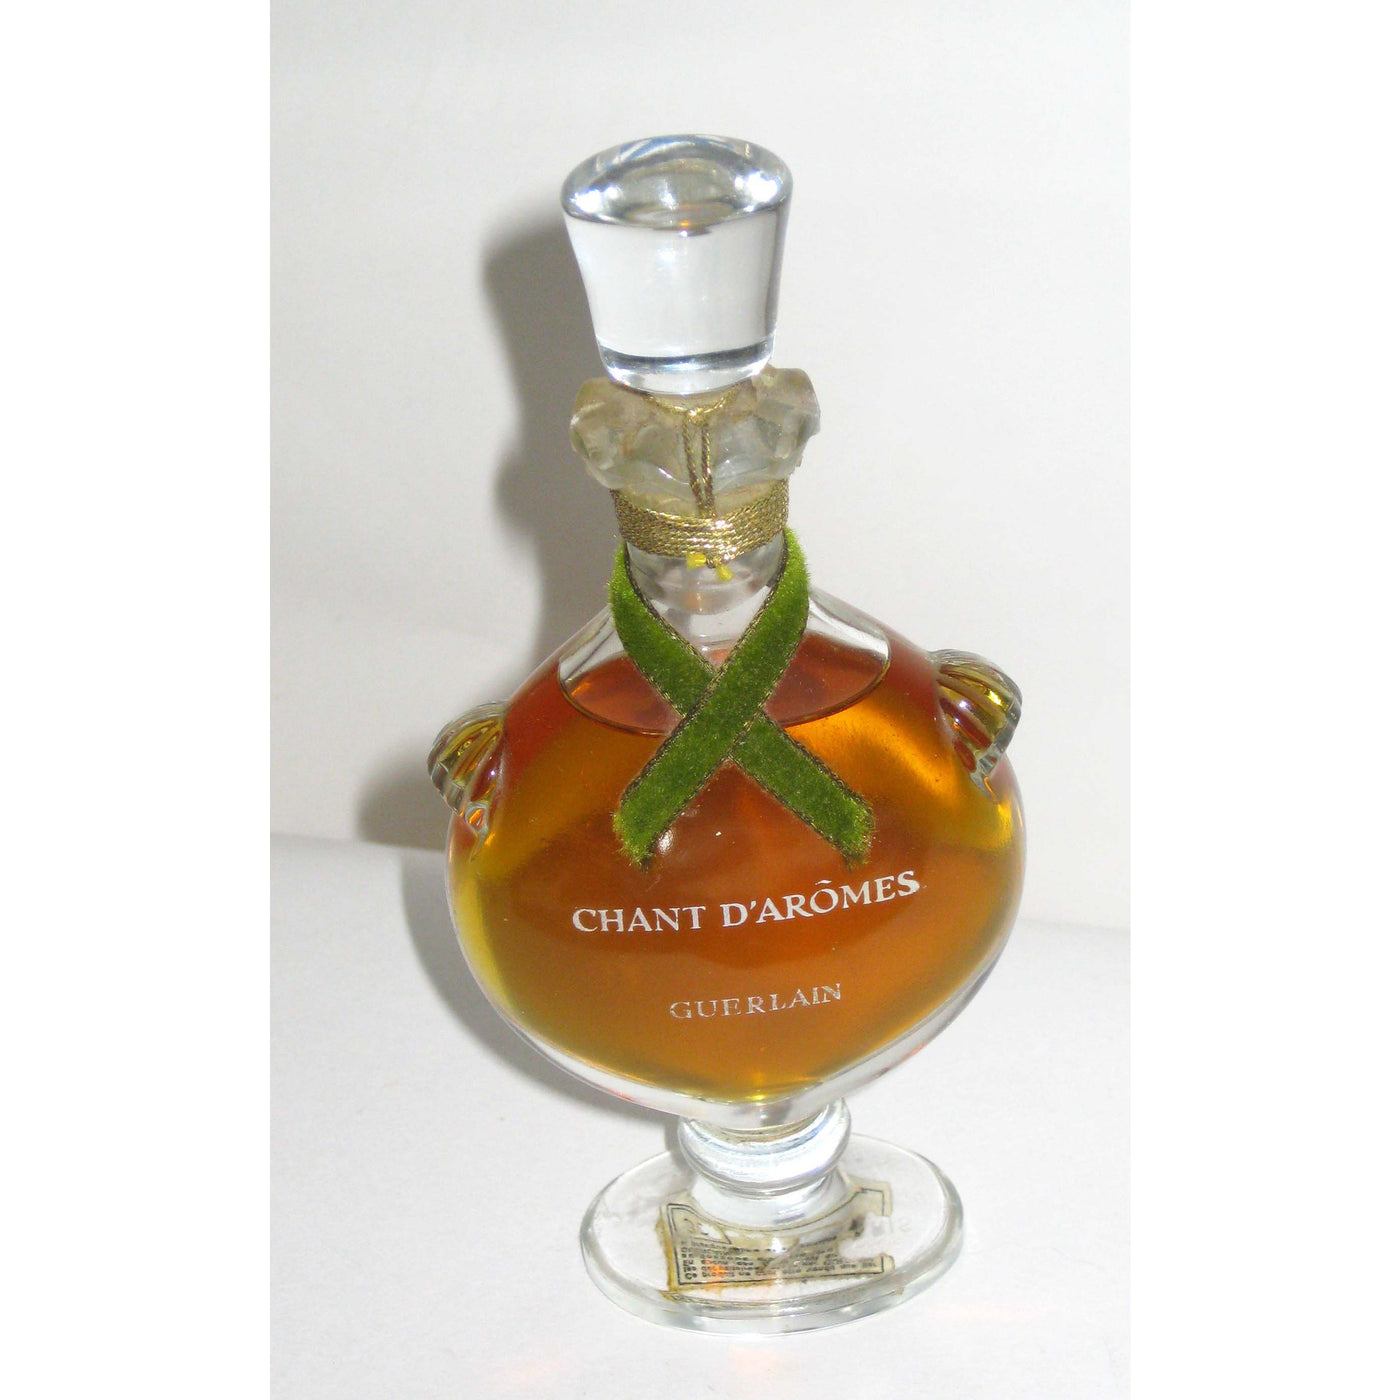 Vintage Guerlain Chant d'Aromes Glass Perfume Flacon